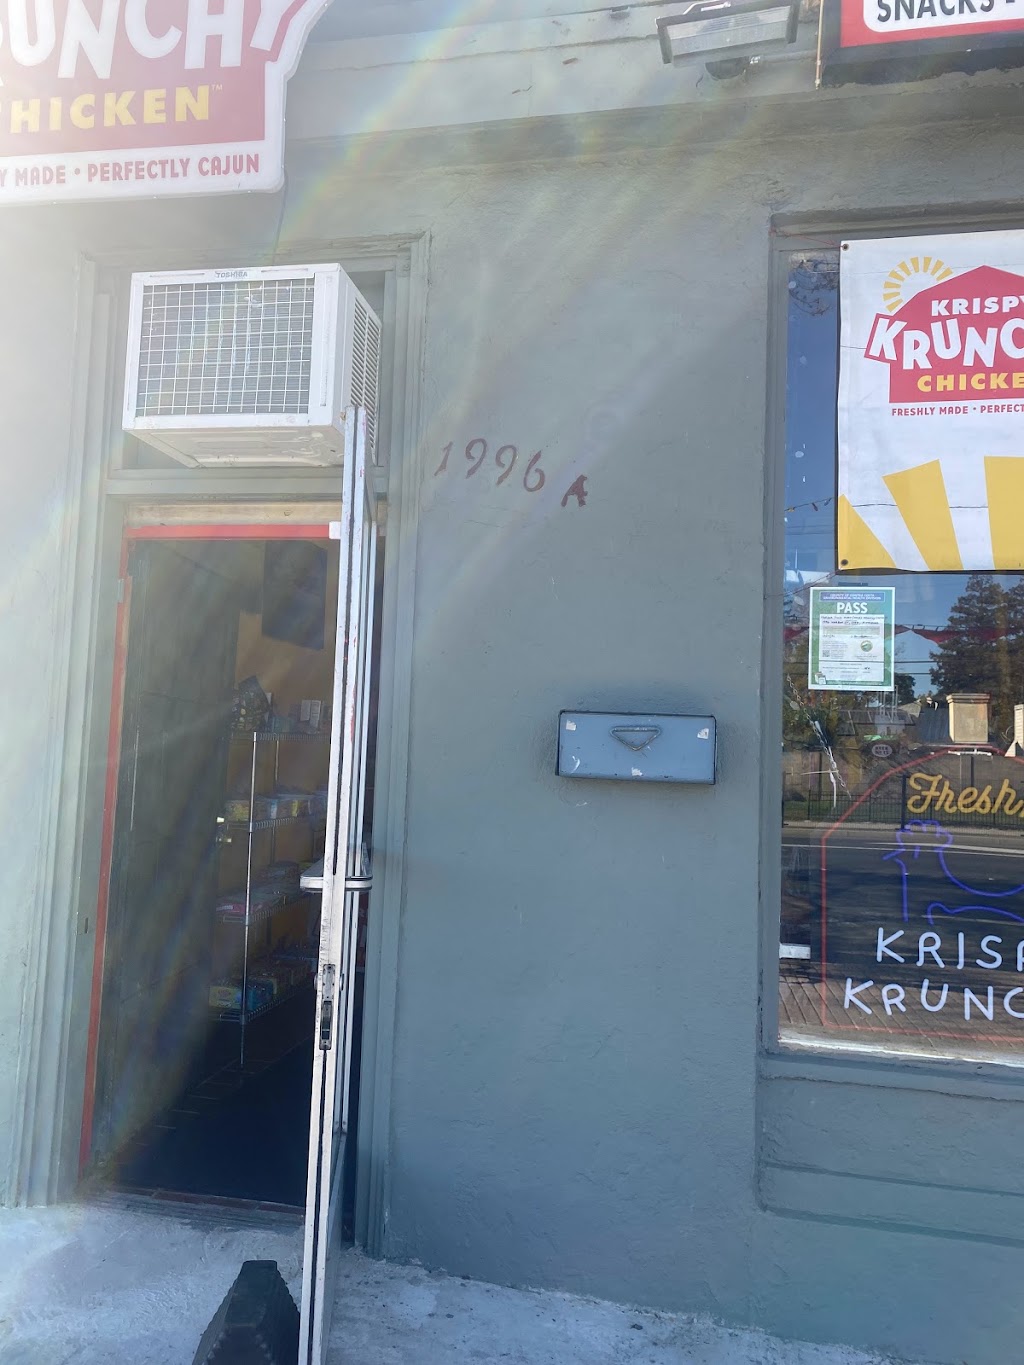 Krispy Krunchy chicken | 1996 Harbor St, Pittsburg, CA 94565 | Phone: (925) 635-3109